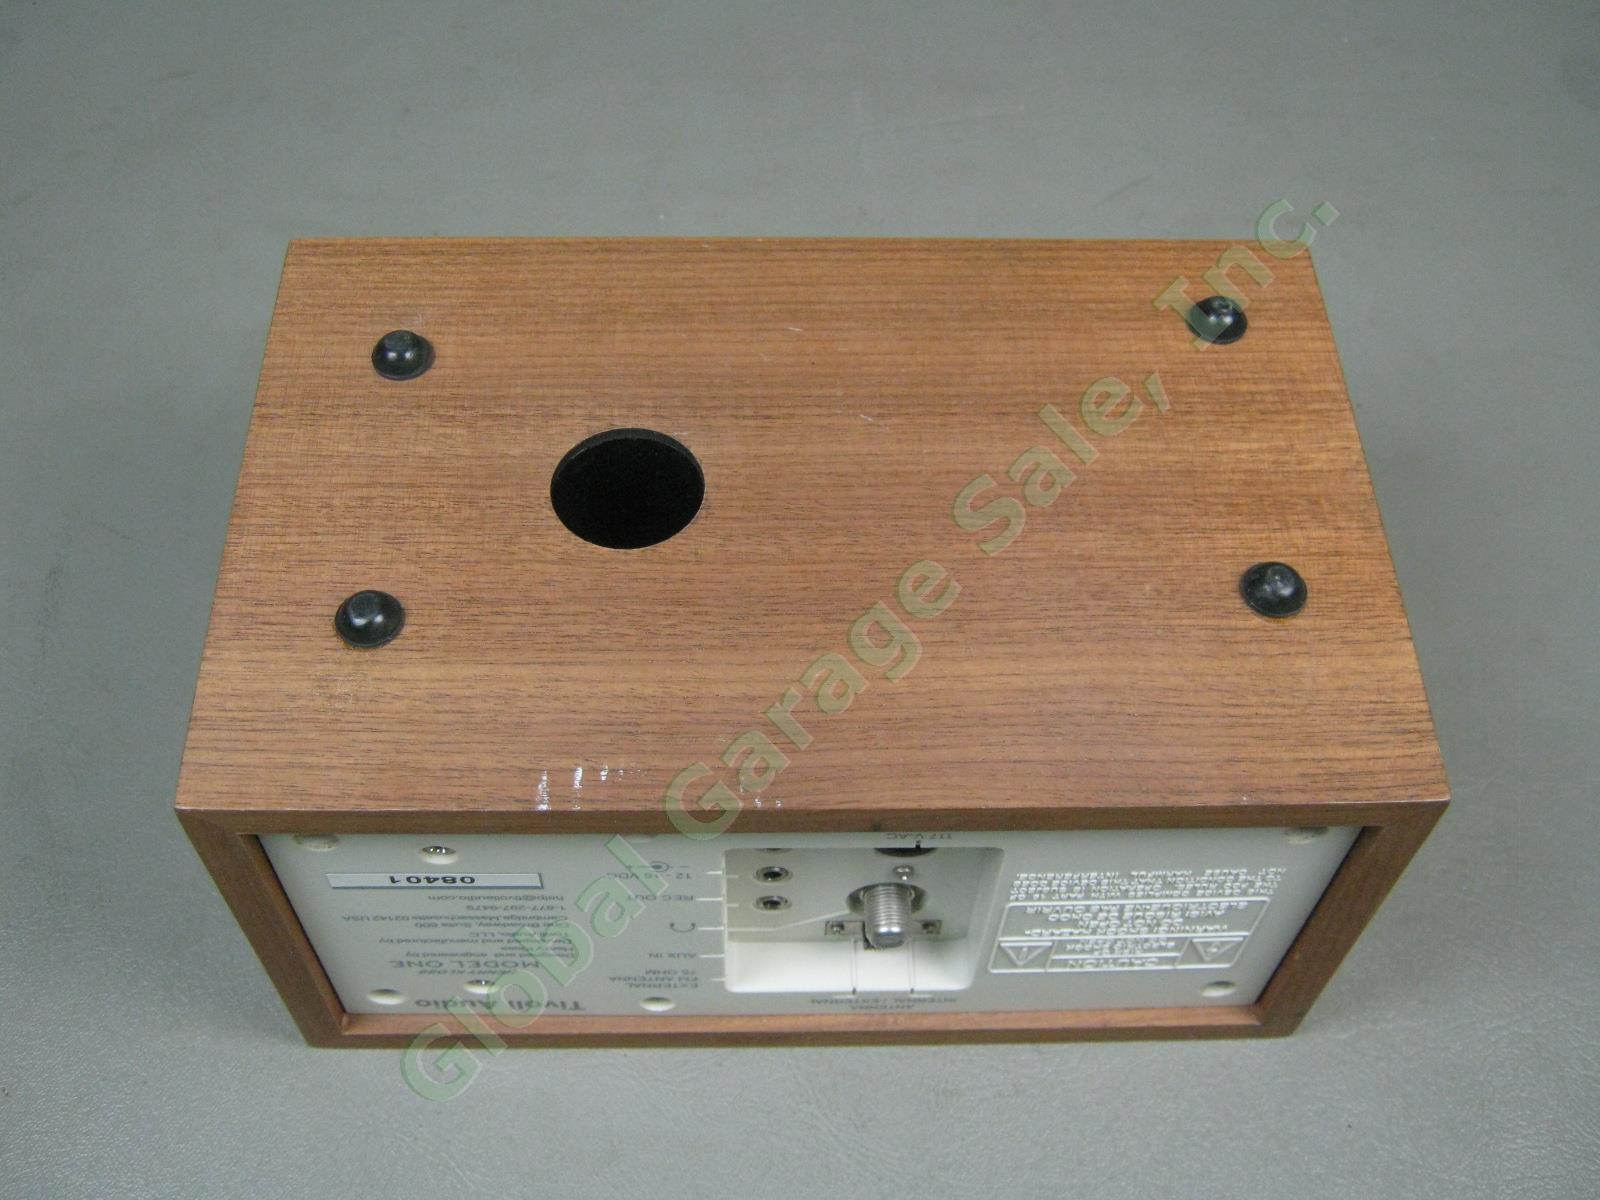 Tivoli Model One AM/FM Radio W/ Walnut/Beige Case Antenna Power Cord Henry Kloss 5